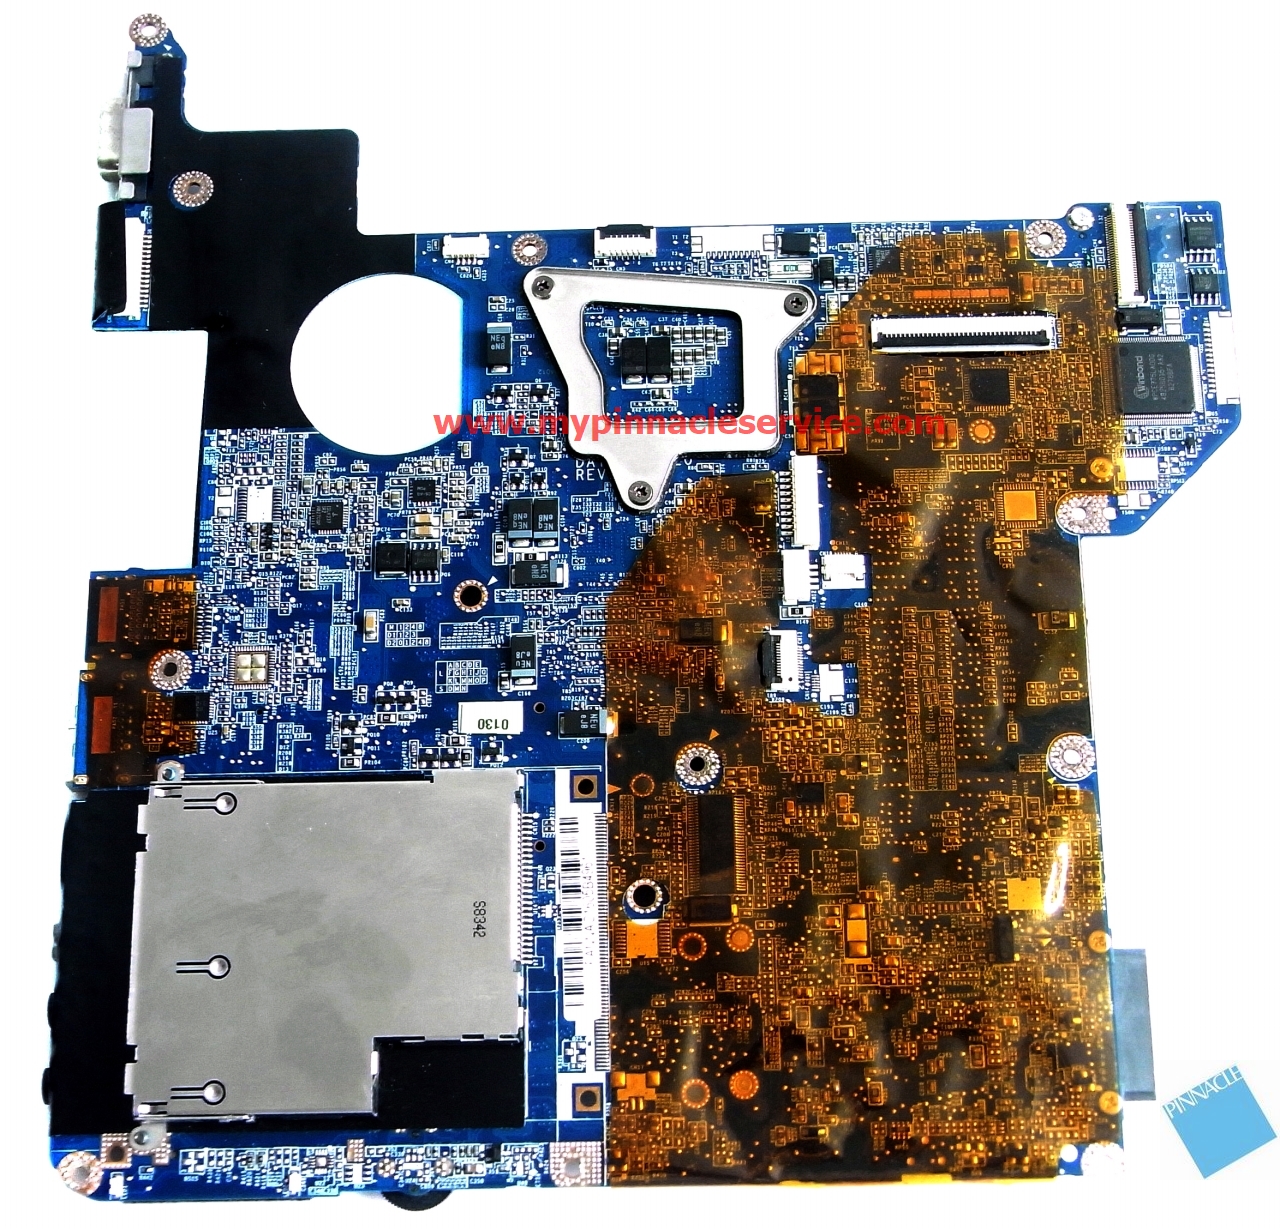 a000027530-motherboard-for-toshiba-satellite-m300-u400-protege-m800-31te1mb0130-rimg0163-1.jpg